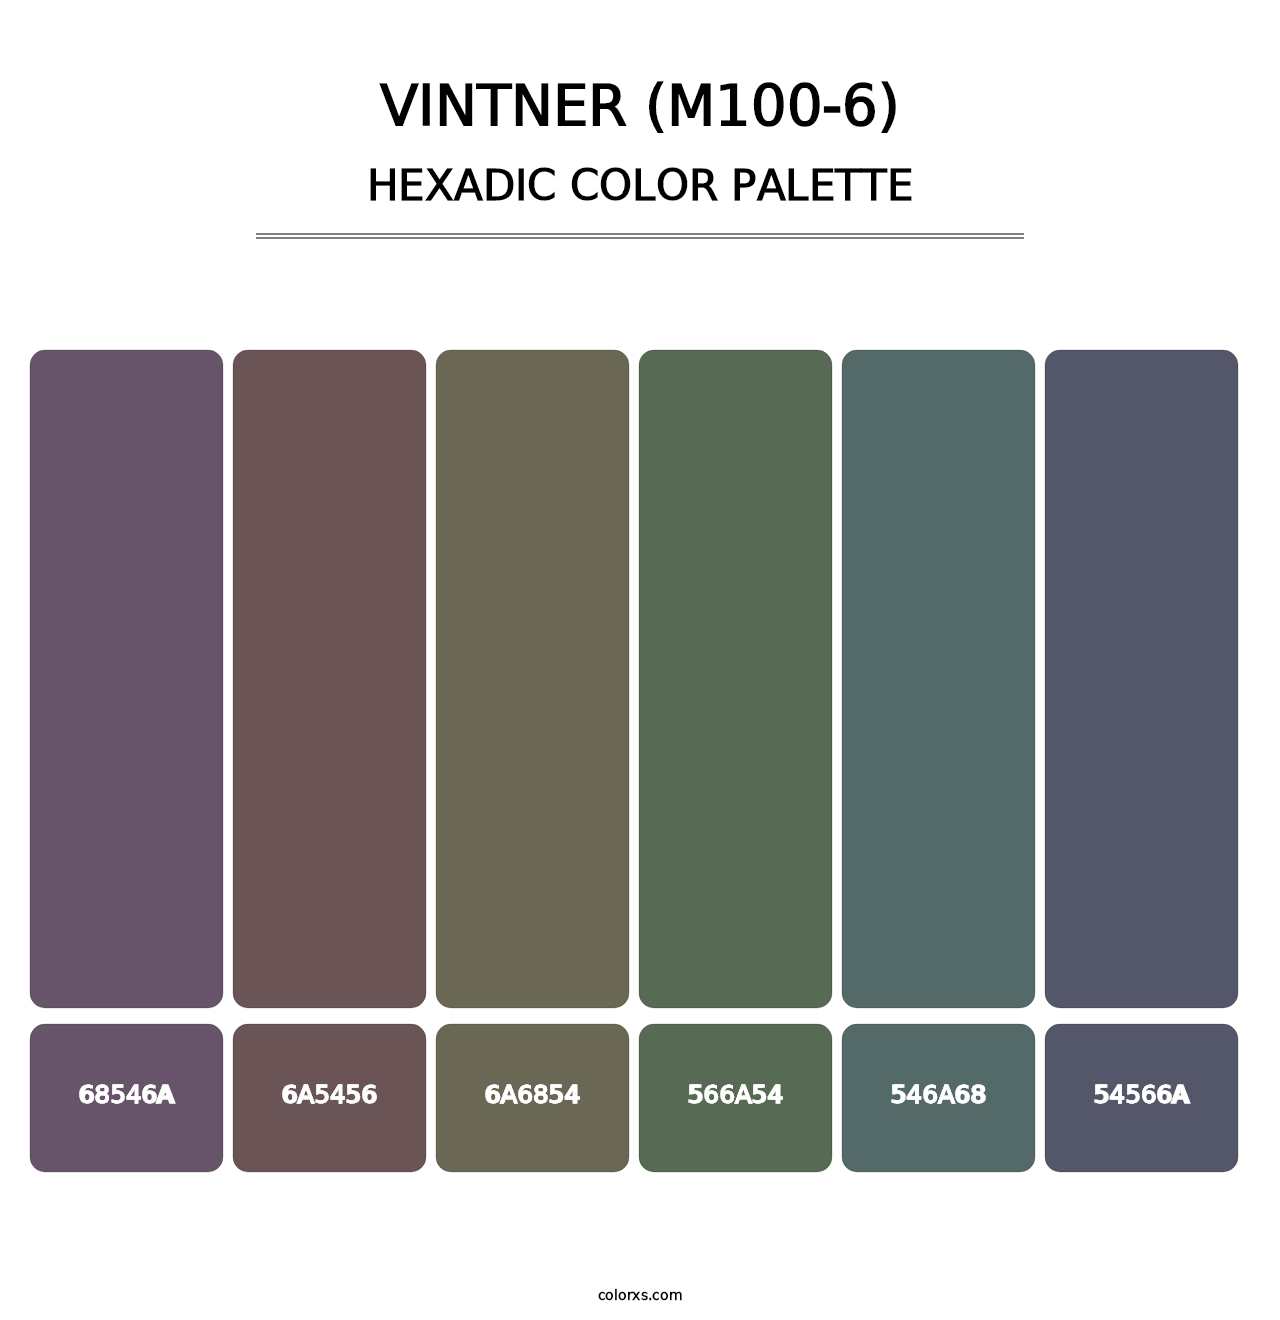 Vintner (M100-6) - Hexadic Color Palette